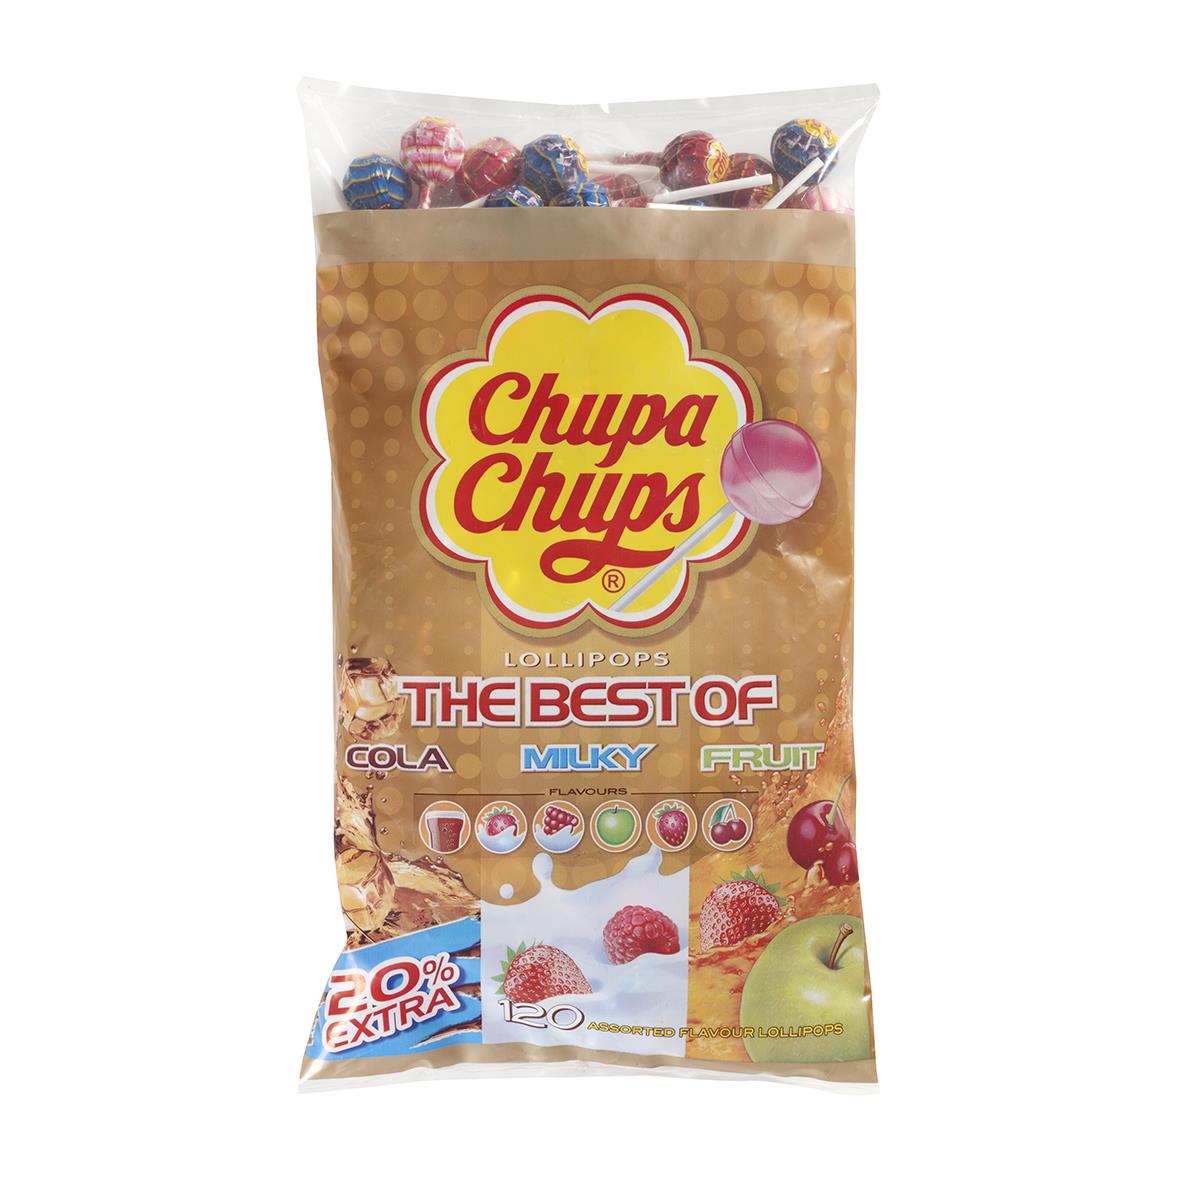 Godisklubba Chupa Chups Best Of Bags